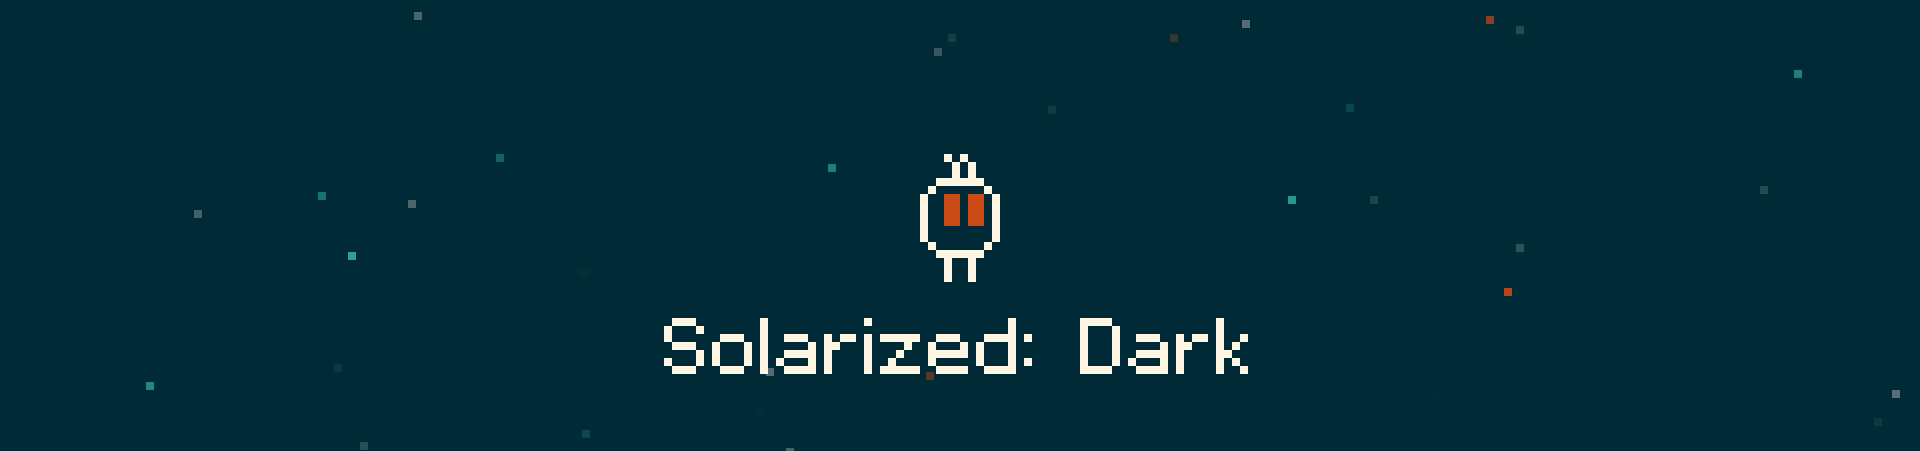 Solarized: Dark